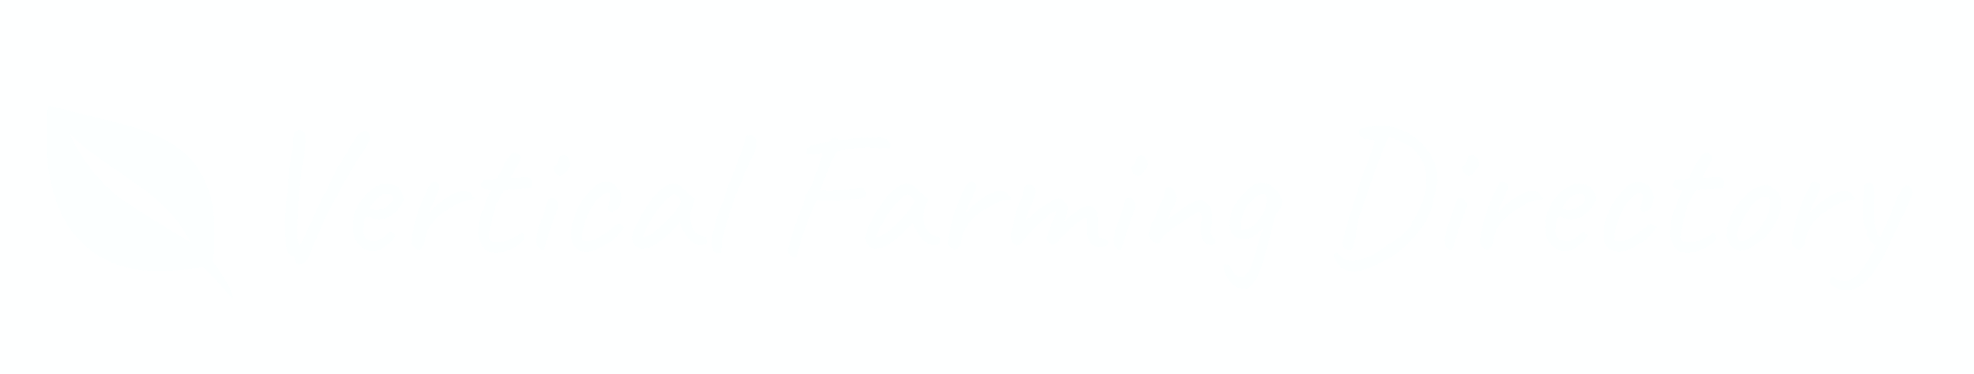 Vertical Farming Directory